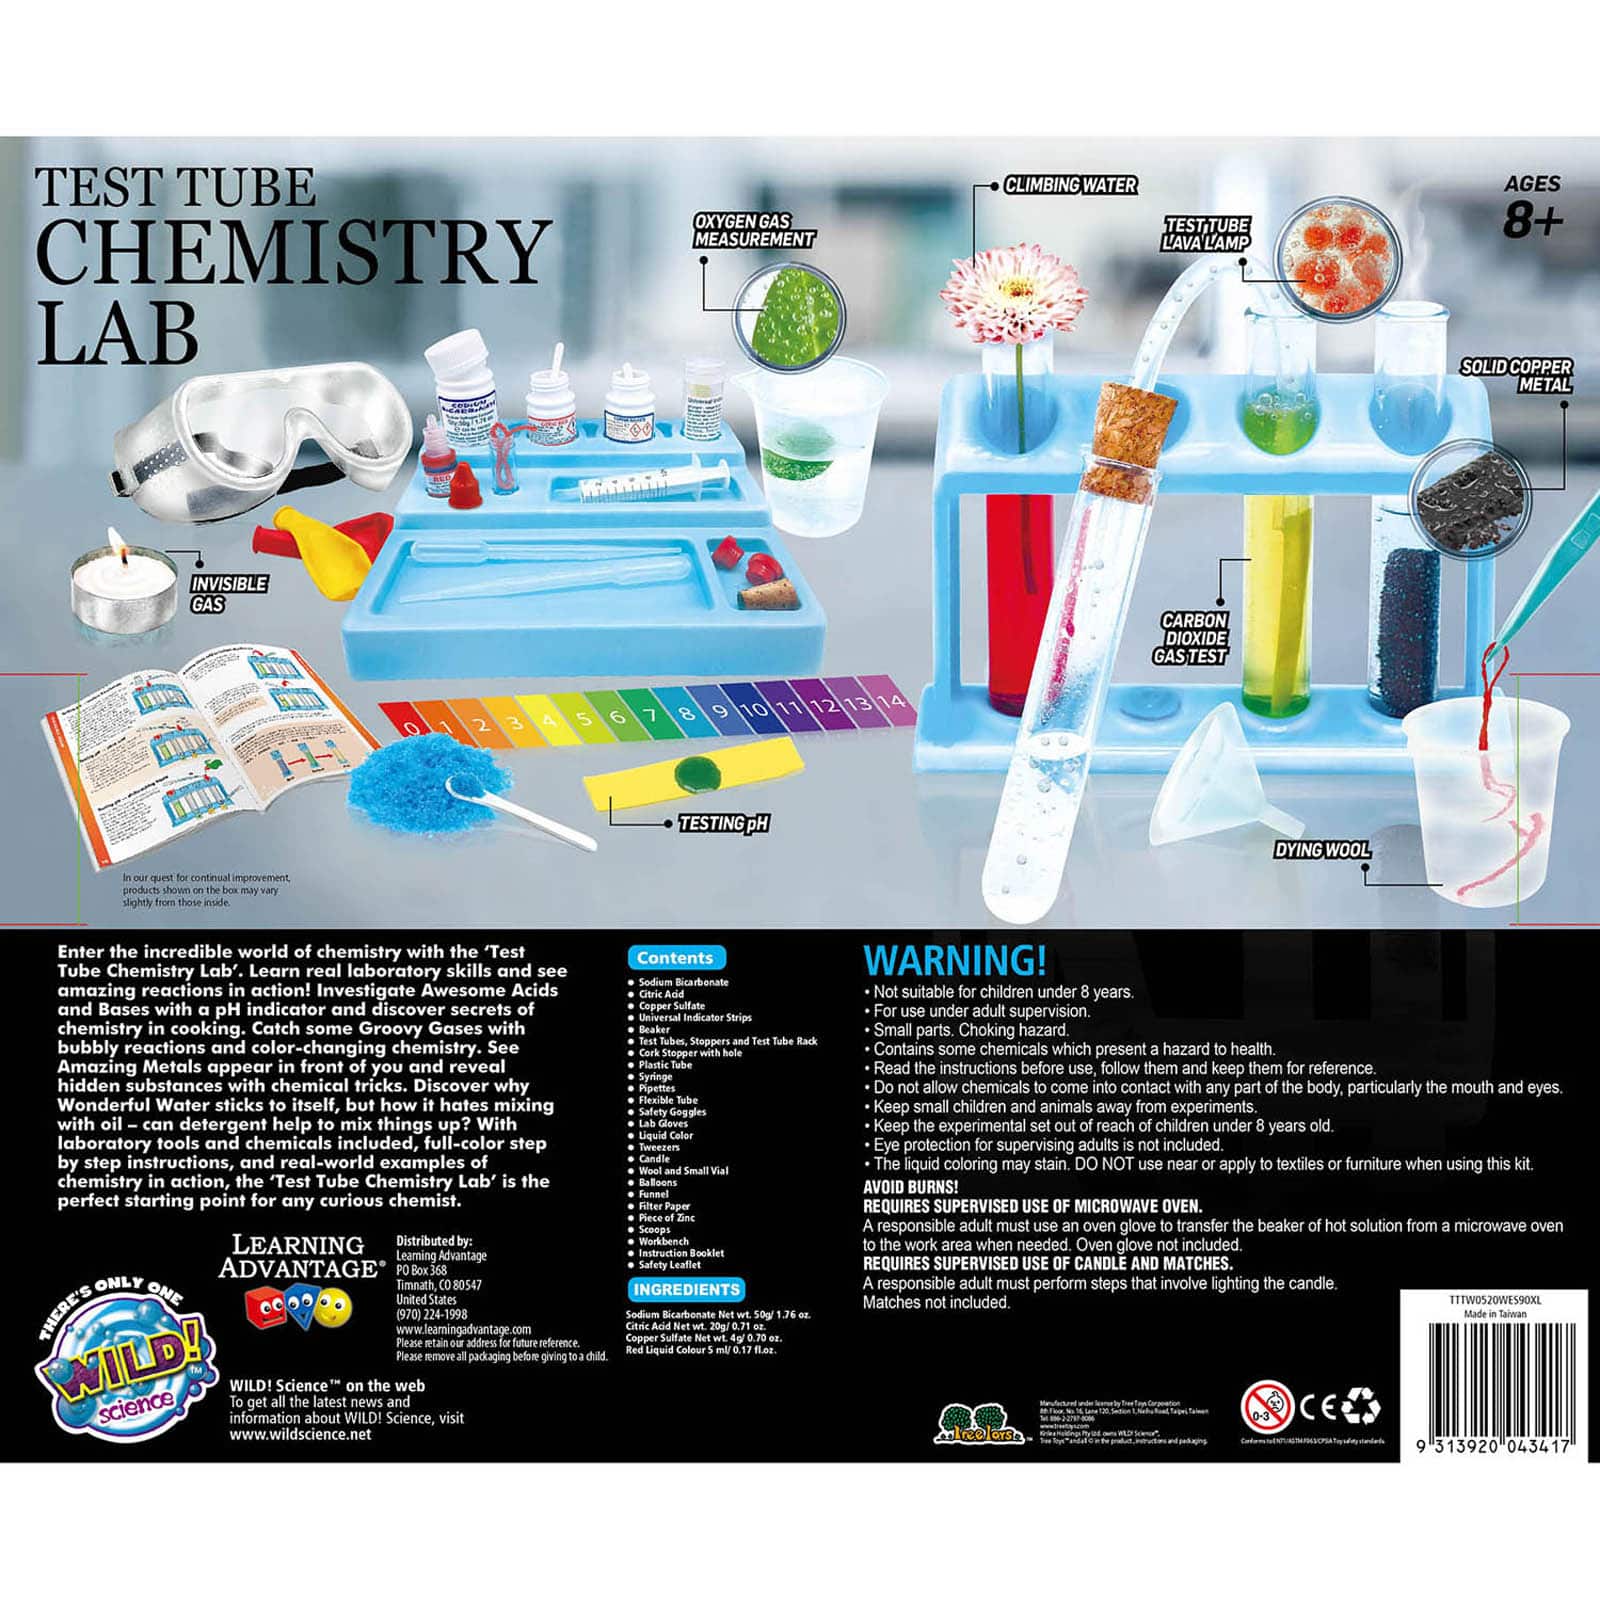 Learning Advantage&#x2122; Wild Environmental Science&#x2122; Test Tube Chemistry Lab Kit